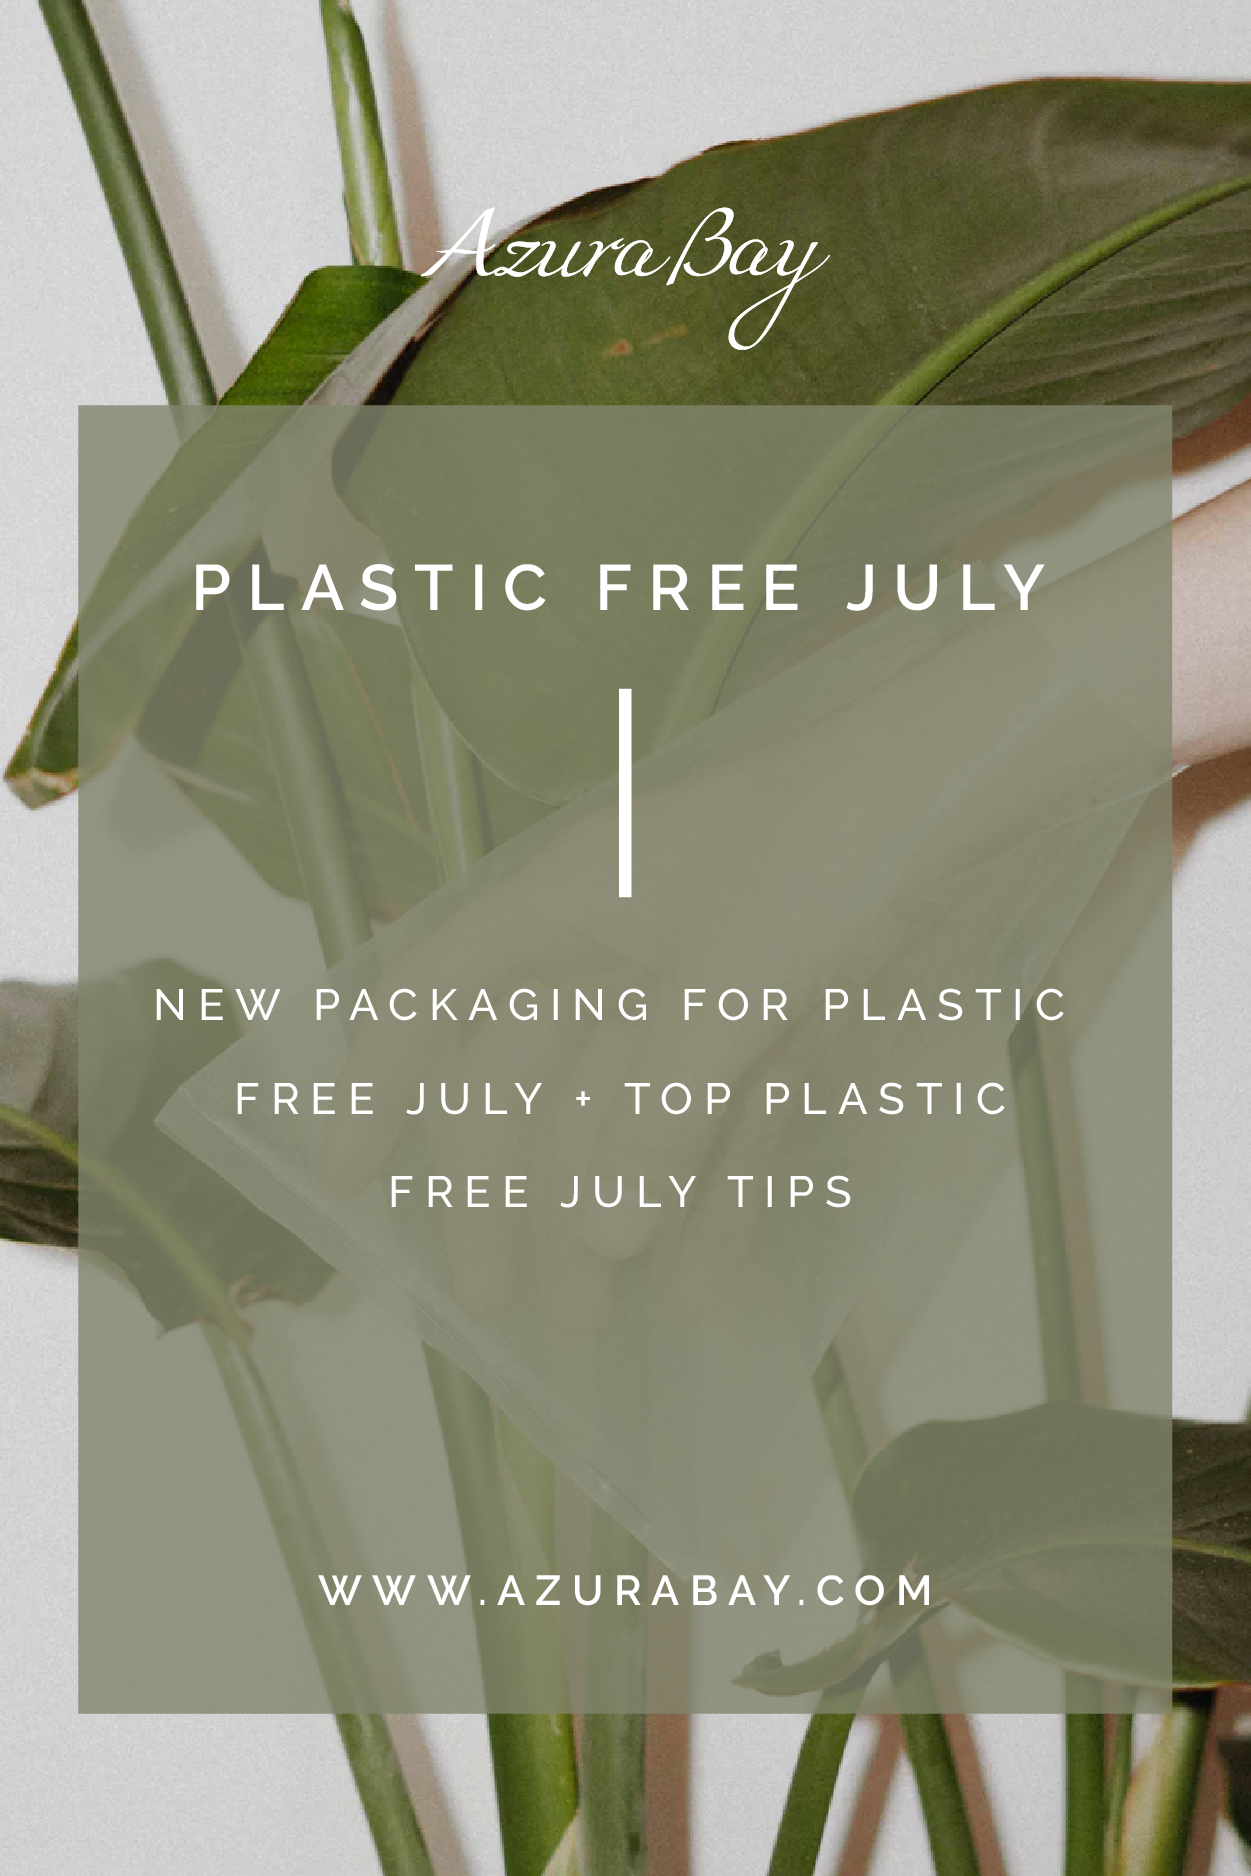 Pinterest Post: Plastic Free July at Azura Bay + Every day zero waste tips